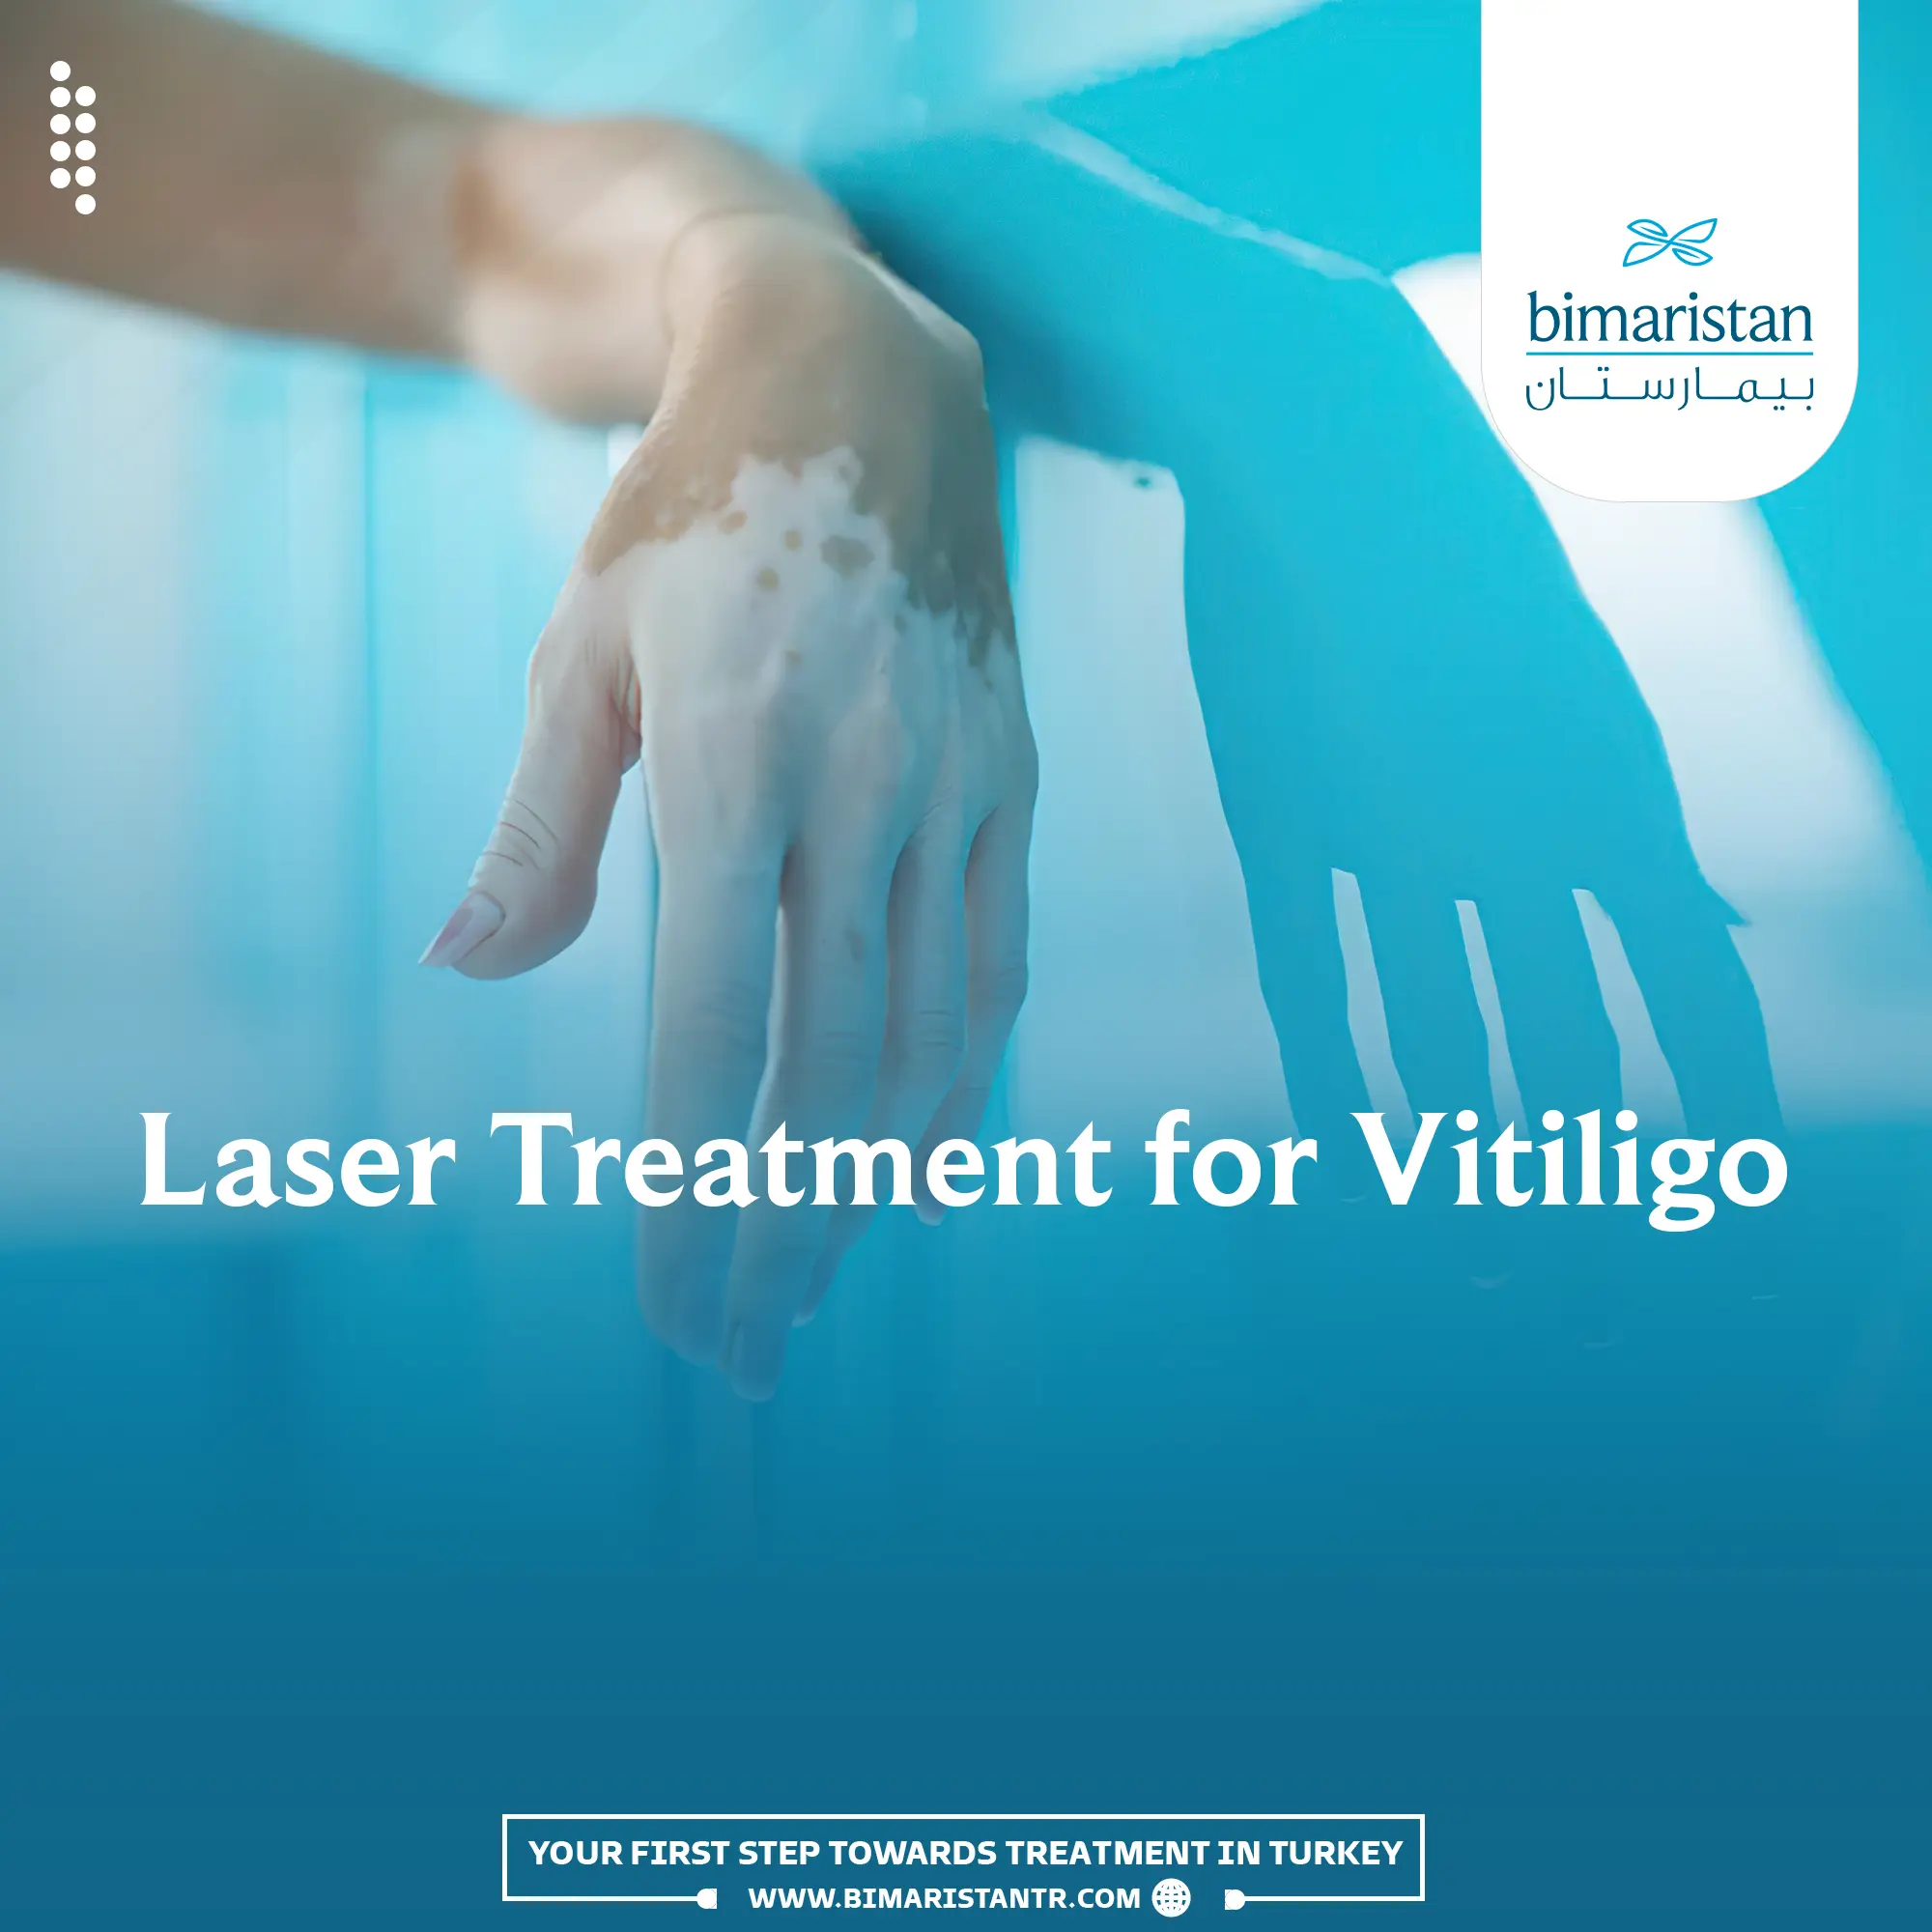 Laser treatment for vitiligo in Turkey